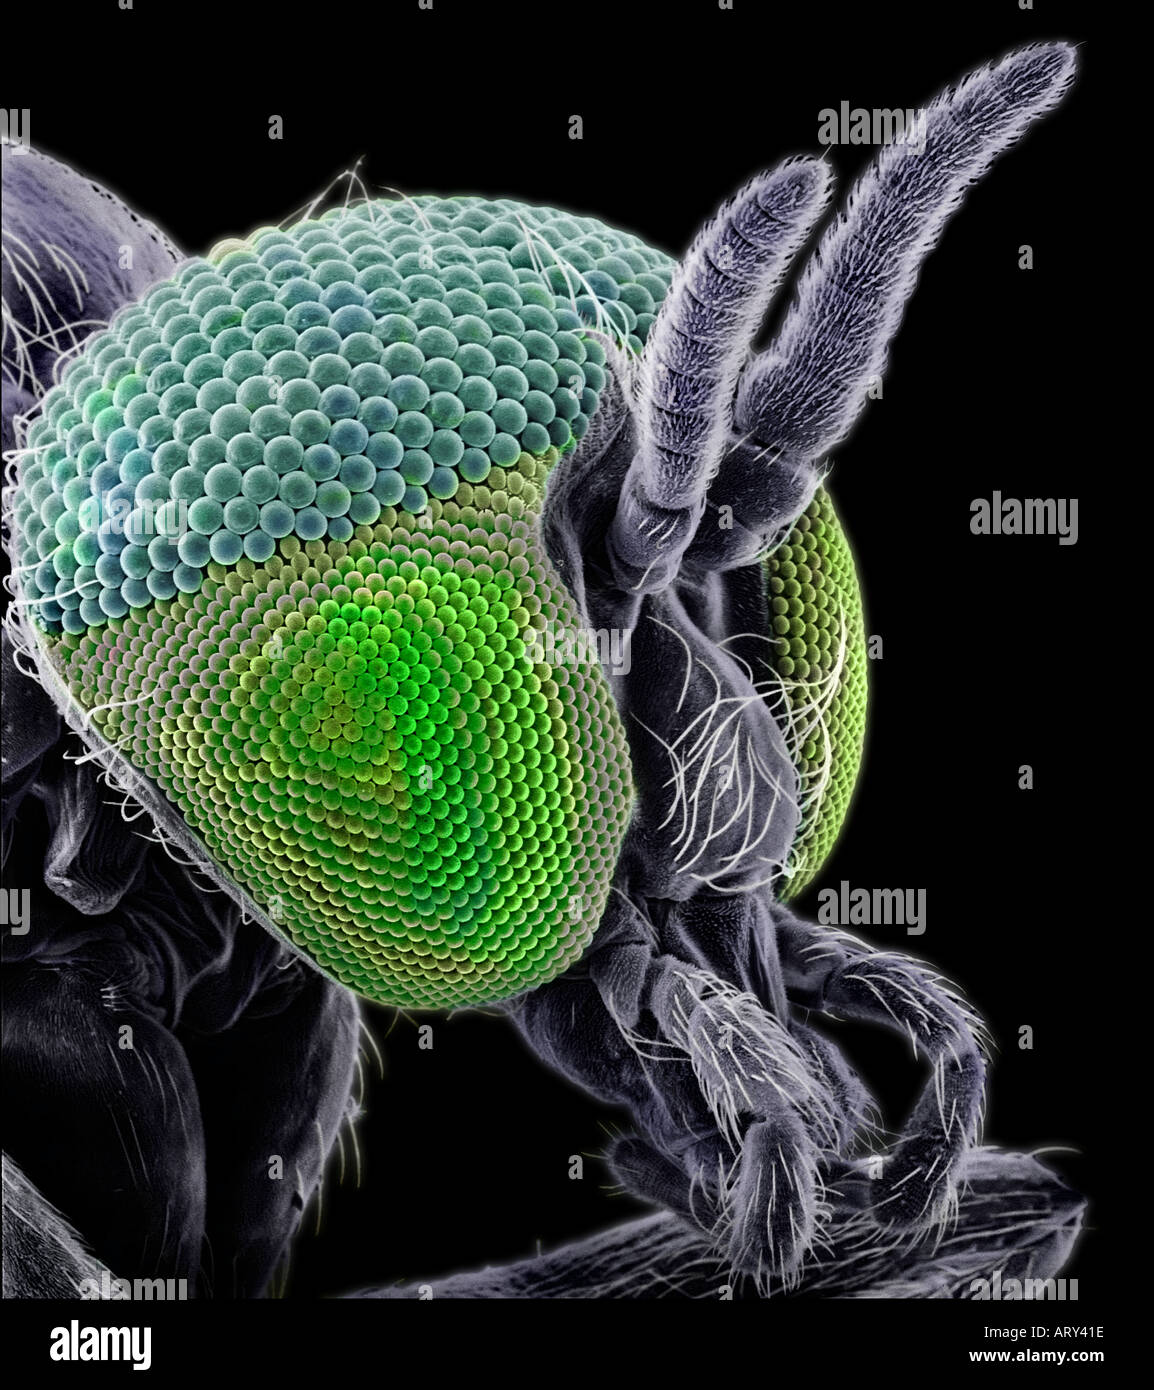 SEM of Simulian blackfly (simulium damnosum) showing the compound eye x 130, colour enhanced Stock Photo